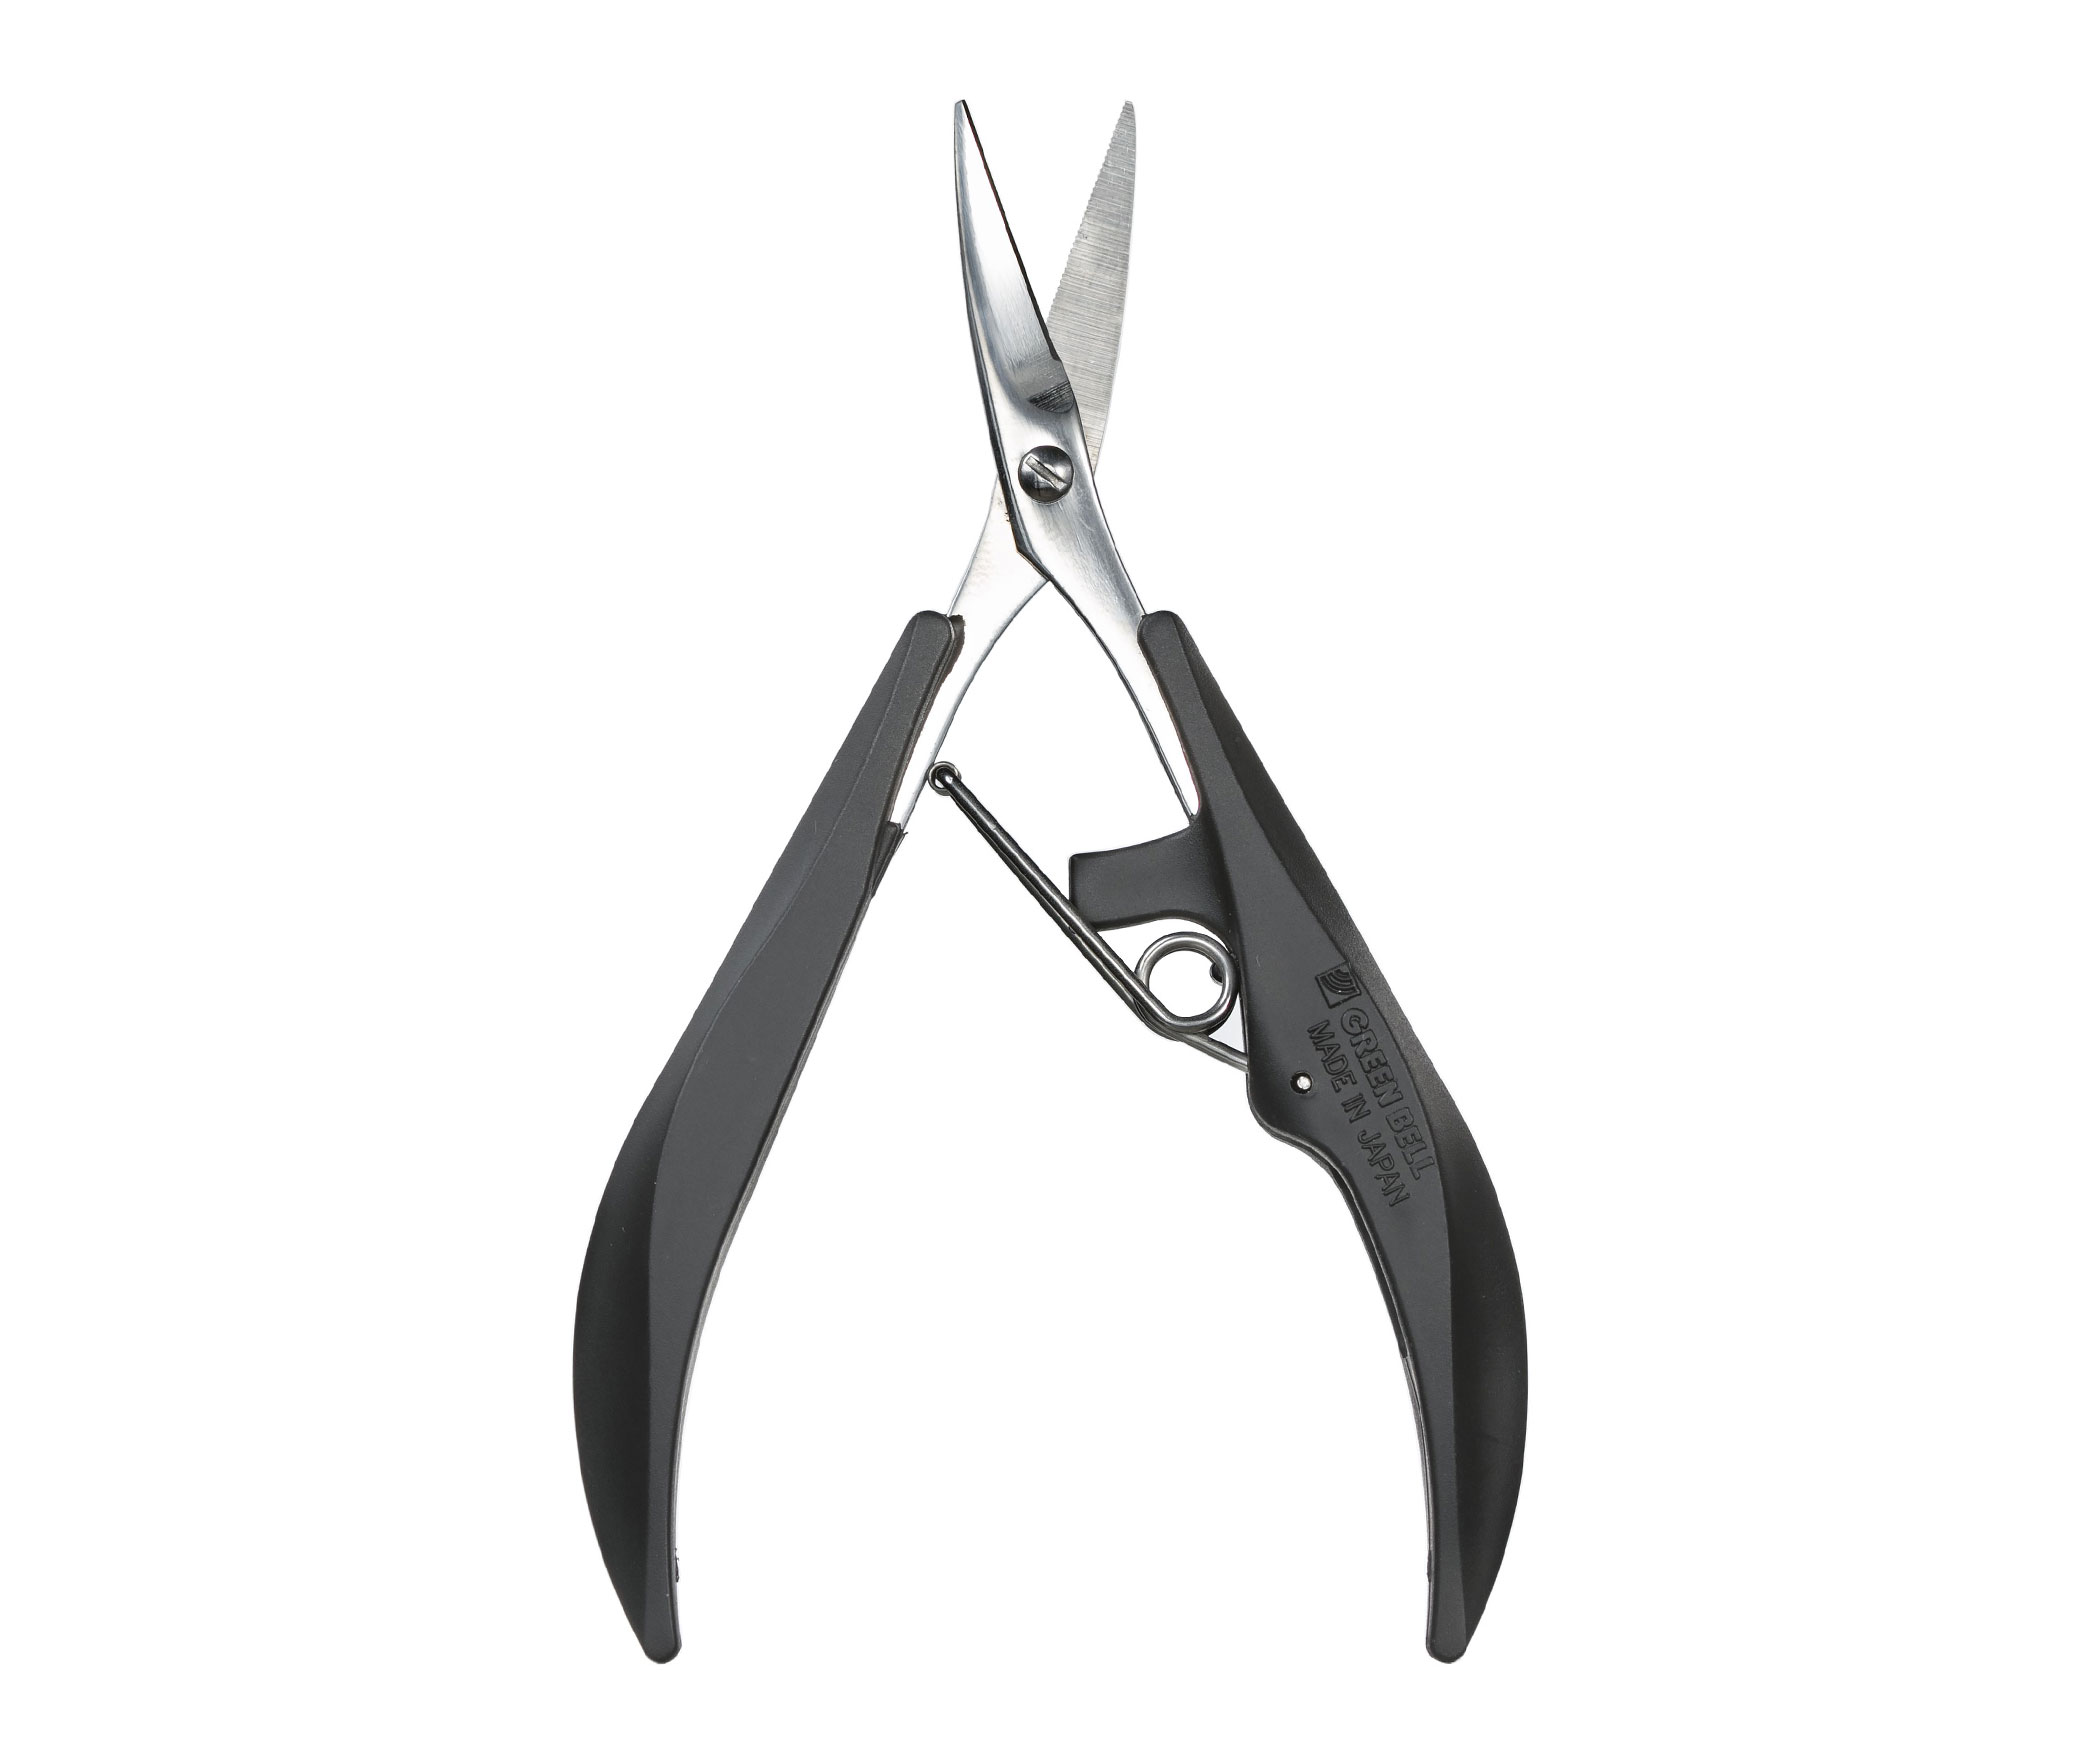 Stainless Steel Spring Scissors